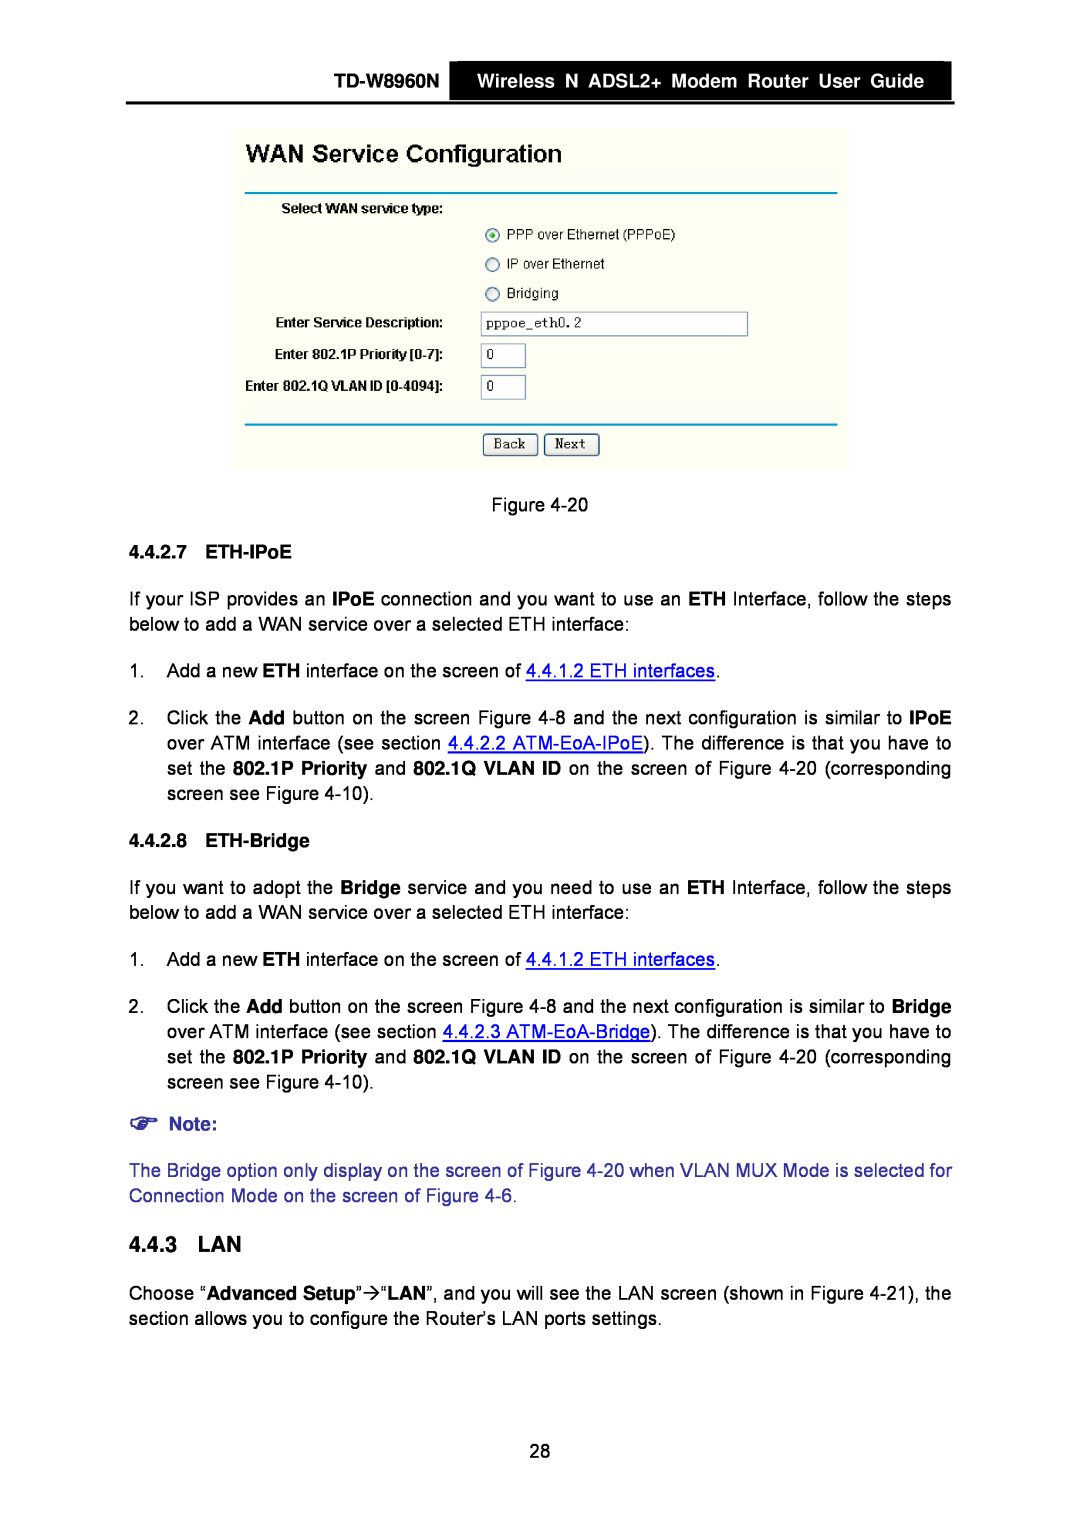 TP-Link manual 4.4.3 LAN, TD-W8960N Wireless N ADSL2+ Modem Router User Guide, ETH-IPoE, ETH-Bridge 